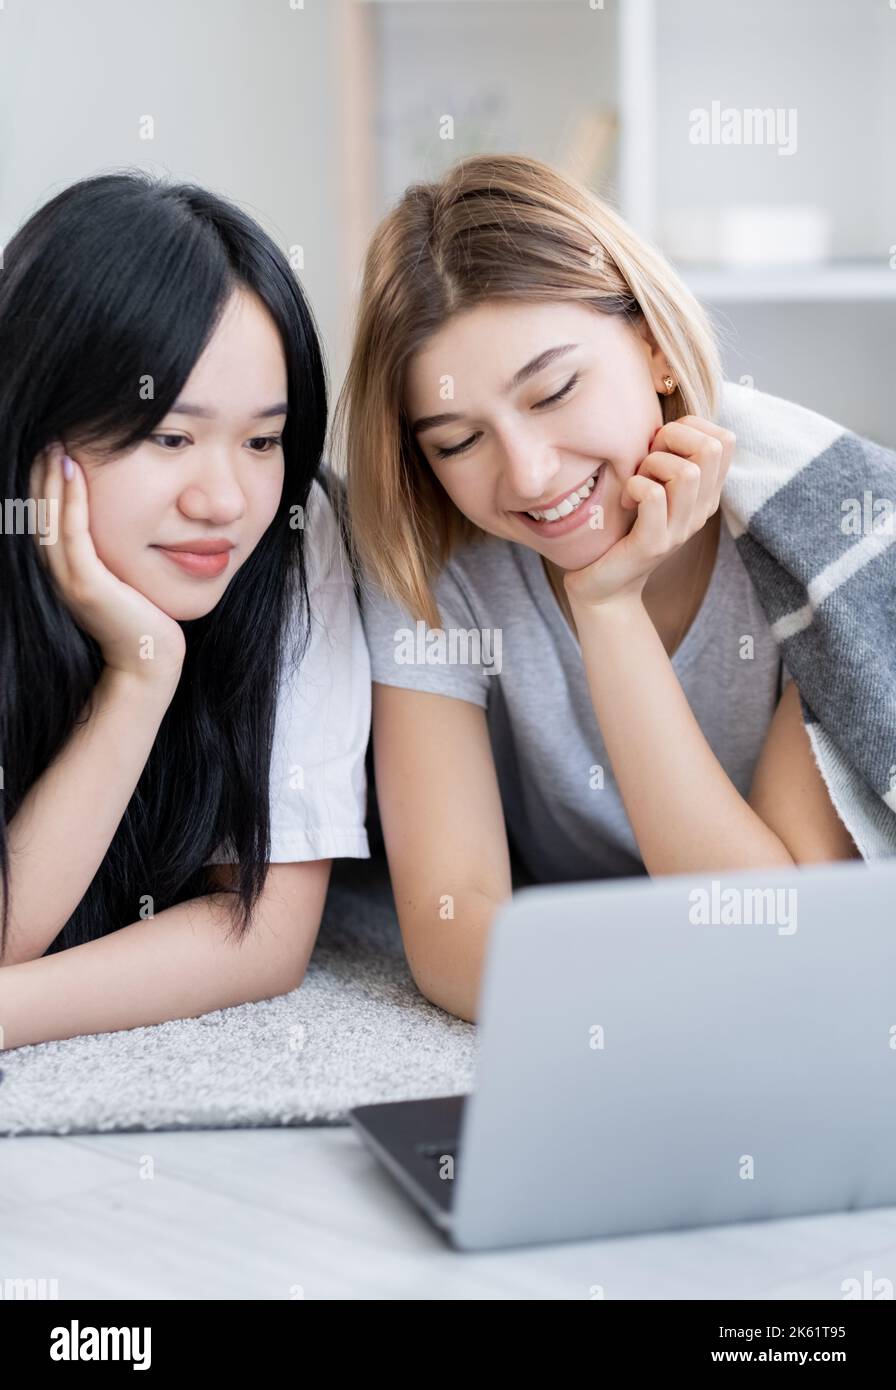 friendly homework happy women online education Stock Photo